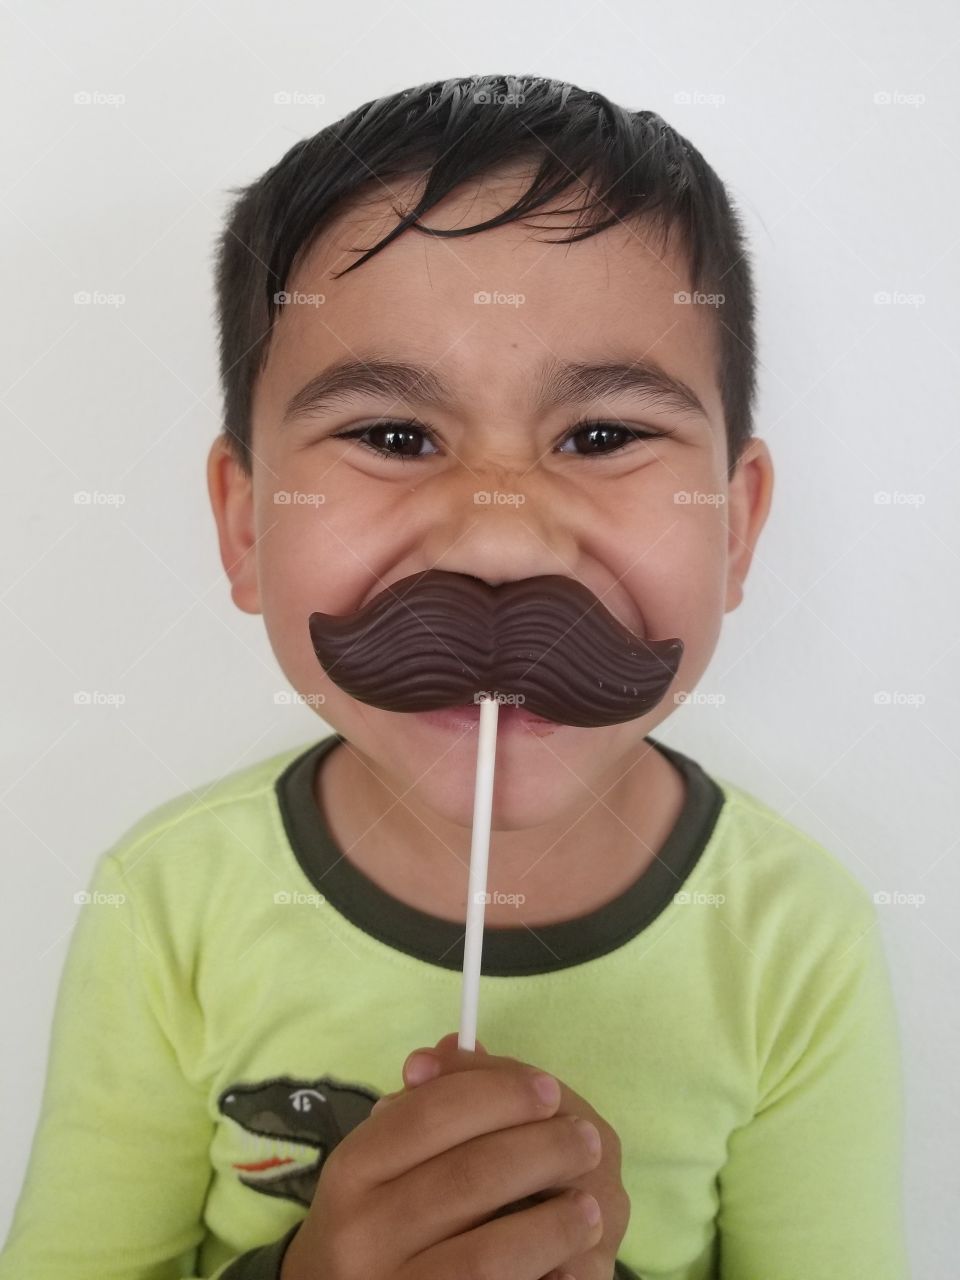 chocolate mustache